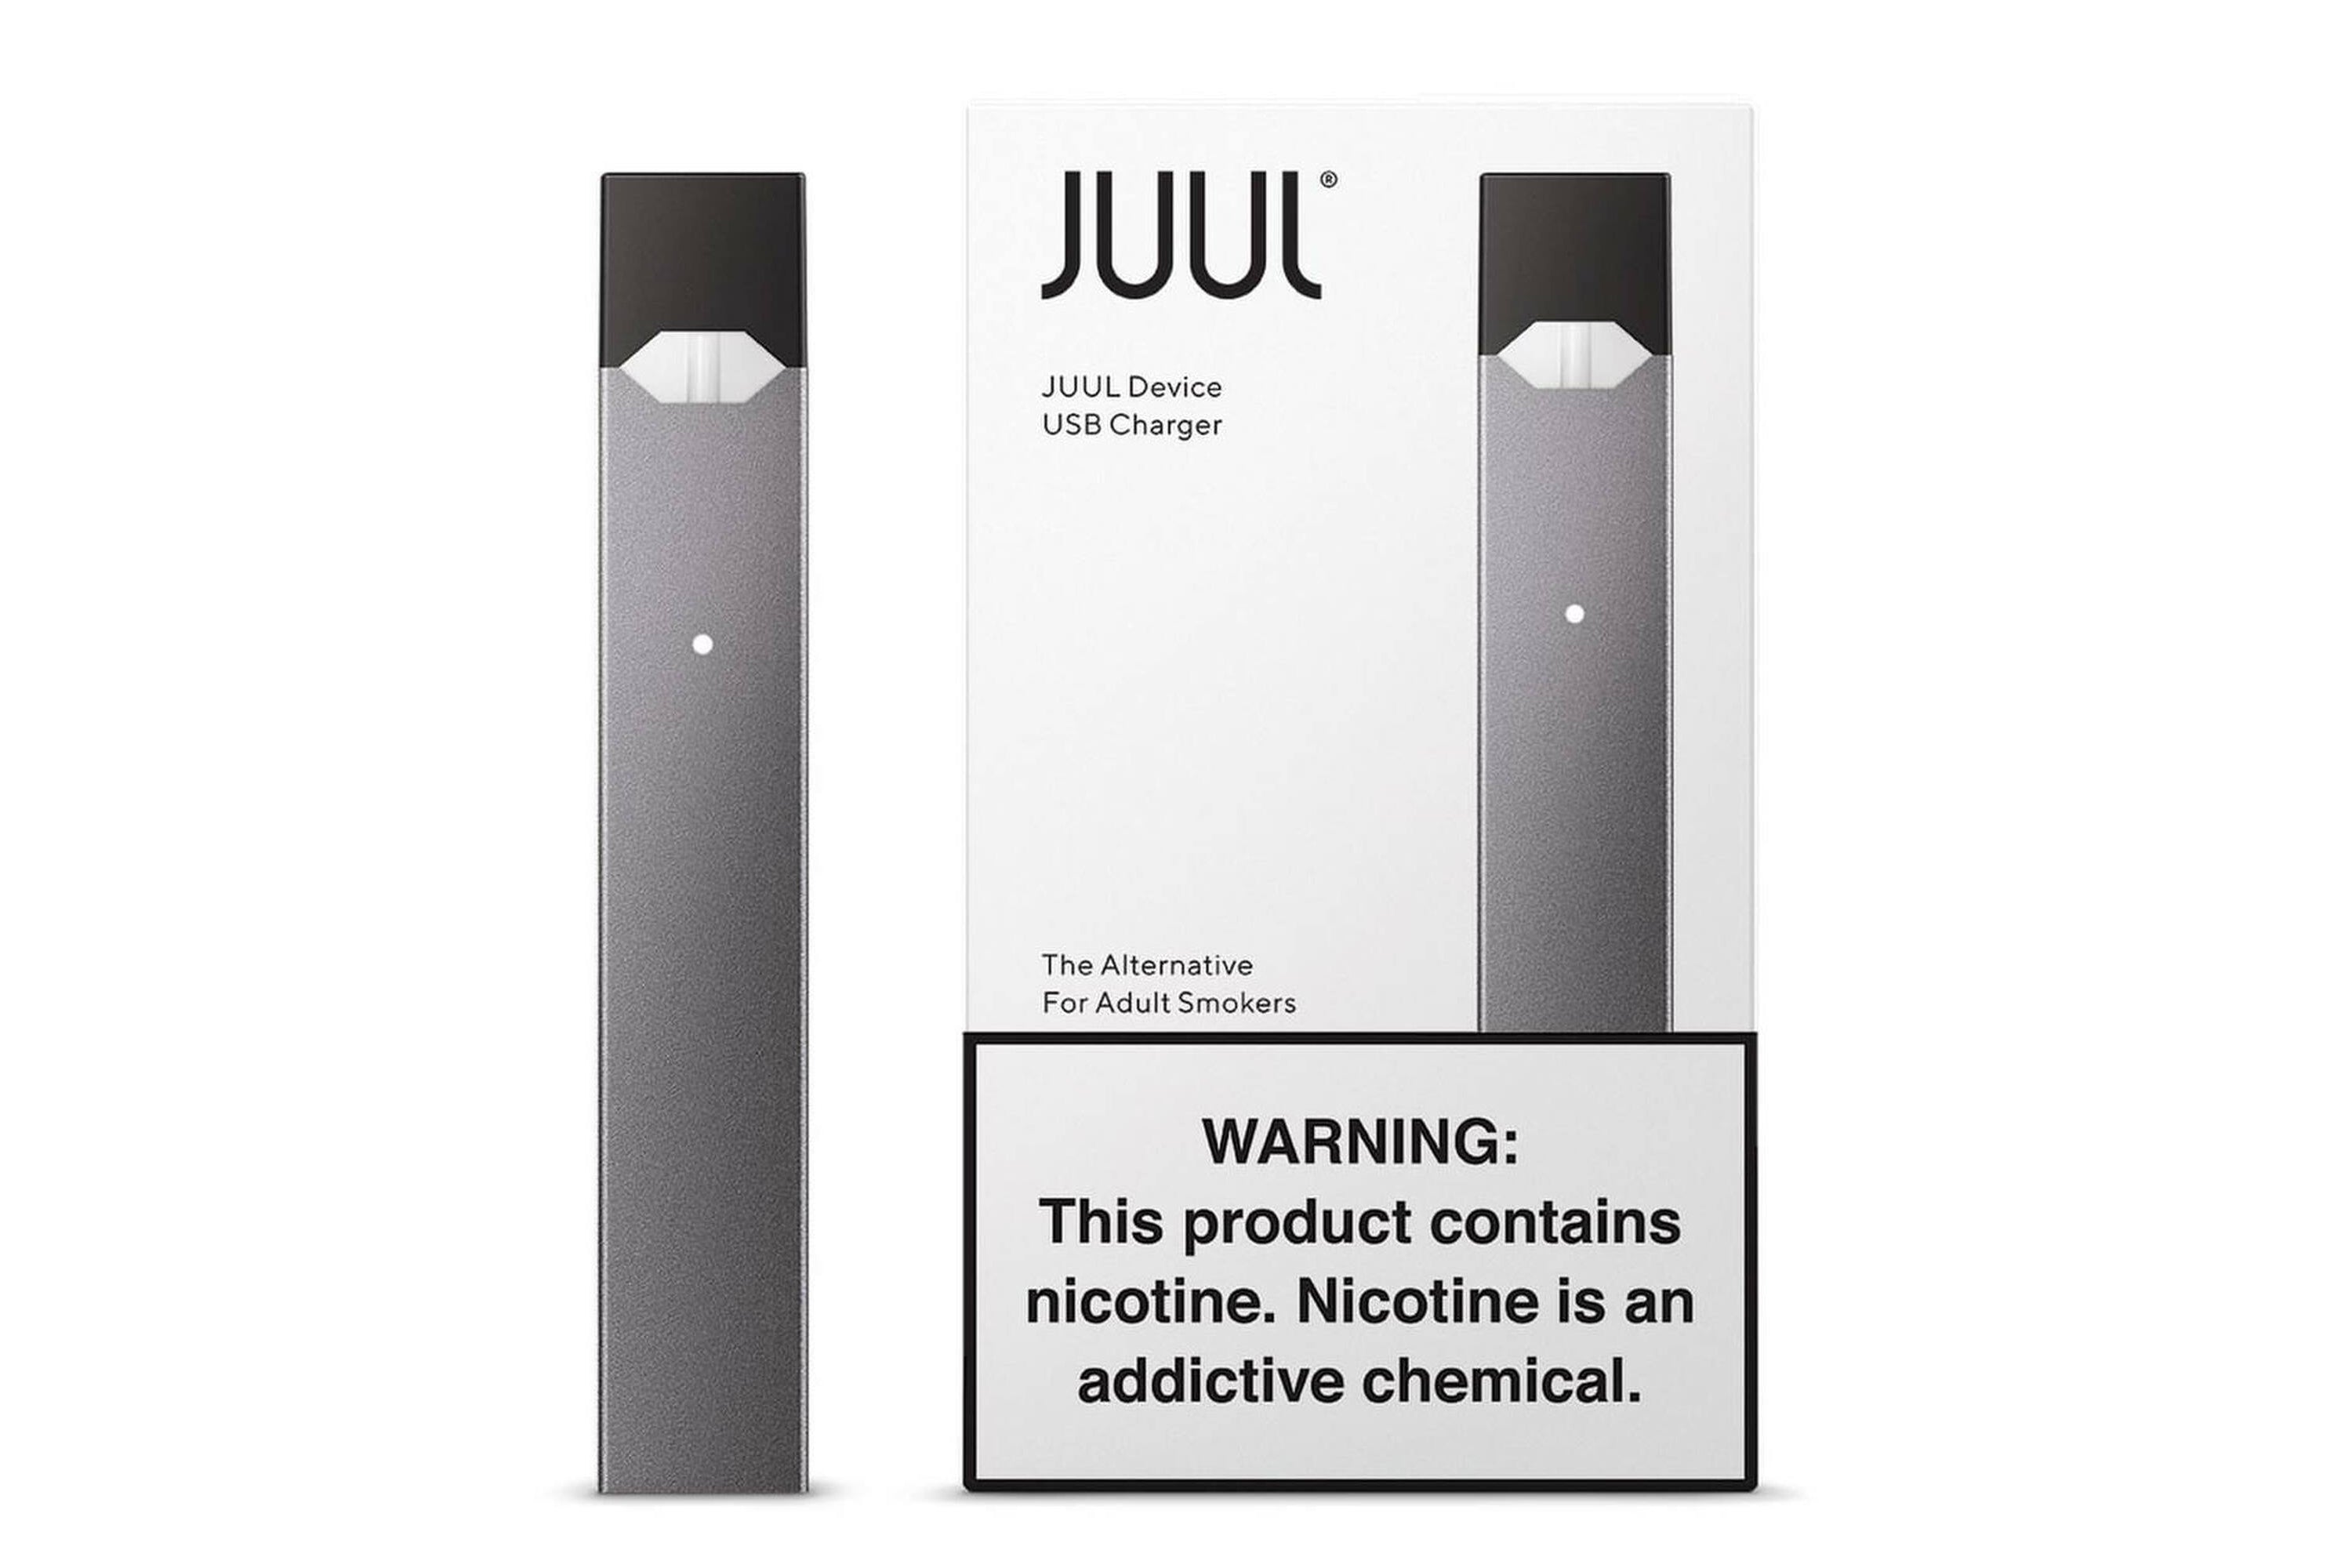 Купить сигареты табак электронные сигареты. Pod-система Juul Starter Kit. Juul Labs Juul 8w 200 Mah электронная сигарета. Электронная сигарета со сменными картриджами Juul. Джул электронная сигарета картриджи.